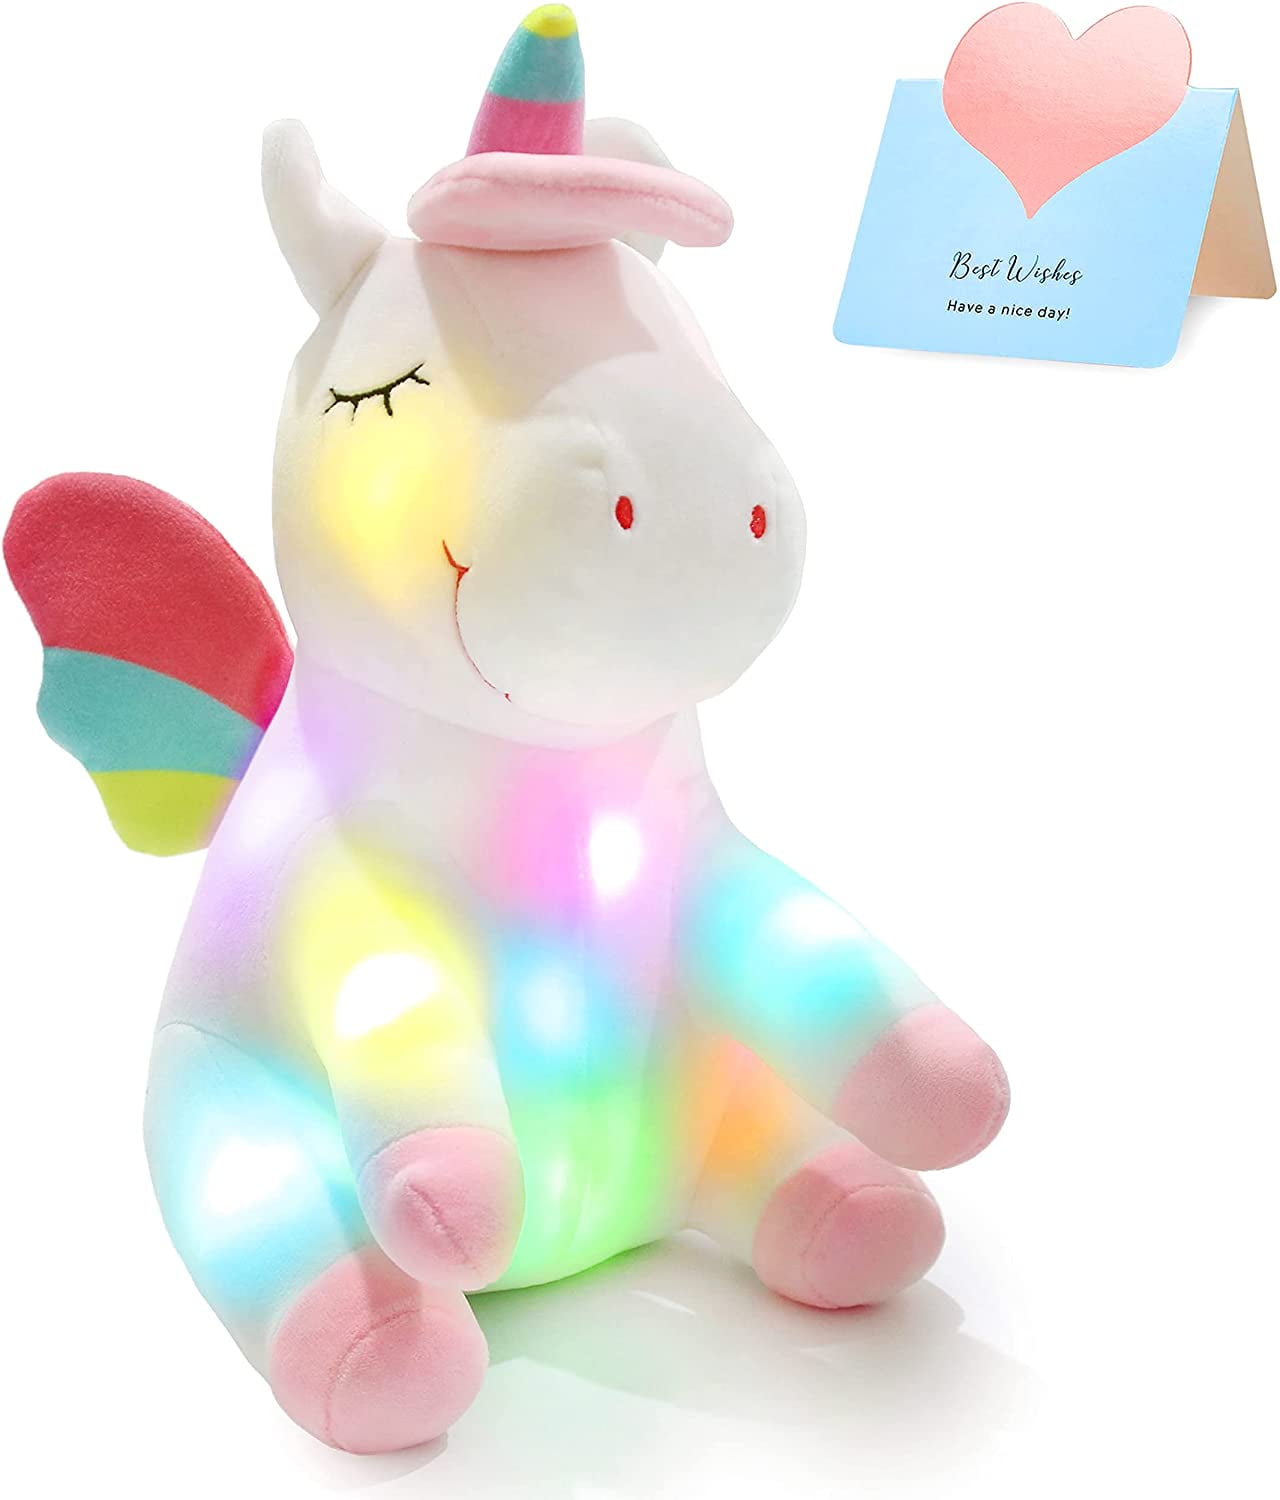 INT 30 Shiny Rαyquαzα Plush Toy,Soft Stuff Animal Collectible Birthday  Gift 